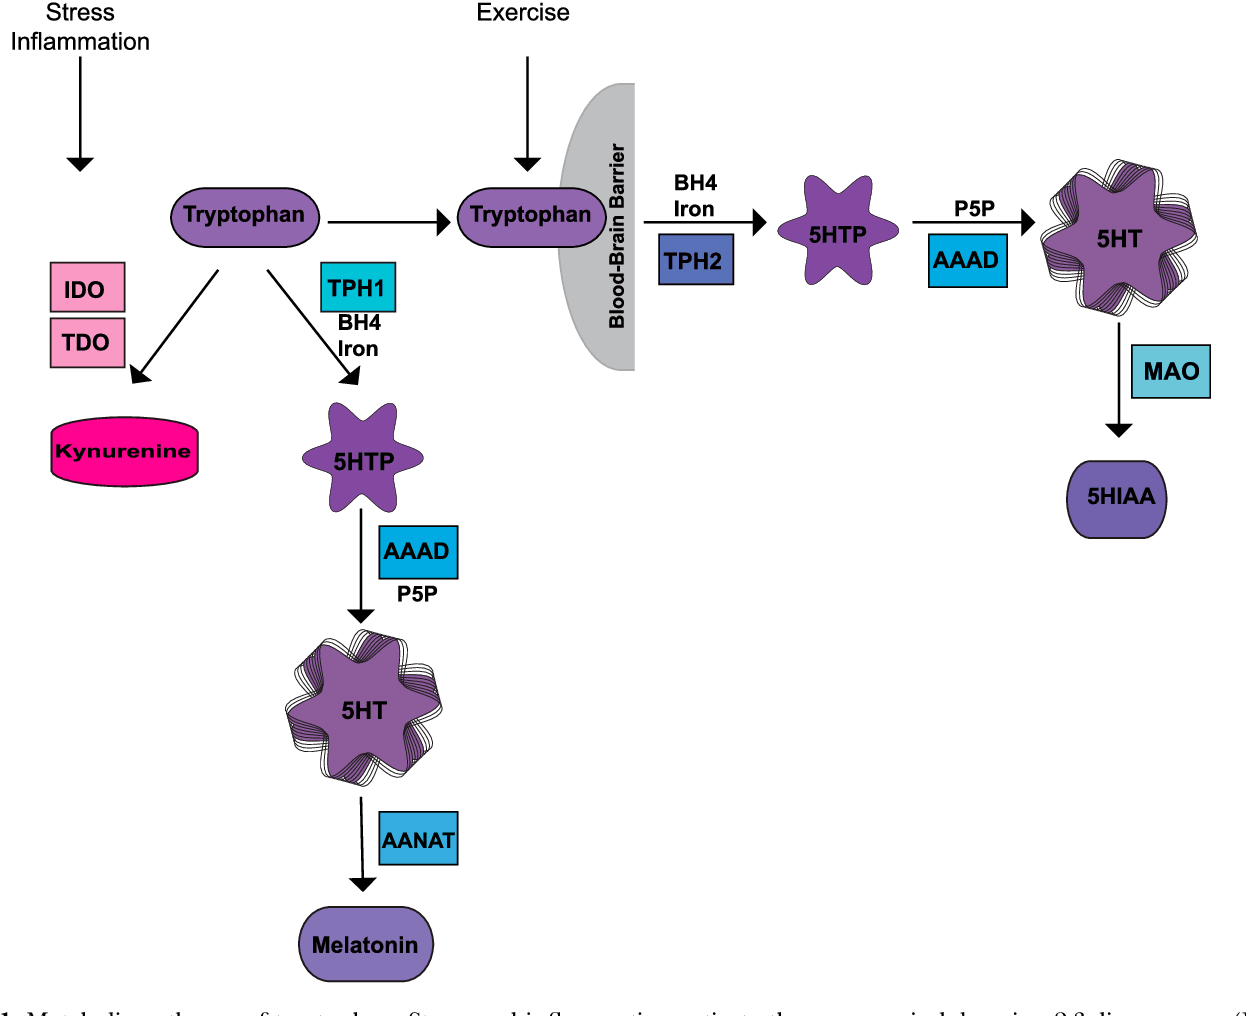 Mechanism of Vitamin D and Omega-3 fatty acids operations on serotonin level. Source: https://www.semanticscholar.org/paper/Vitamin-D-and-the-omega-3-fatty-acids-control-and-Patrick-Ames/b4aef4cf5865d279e58b39430e7069e251f27577